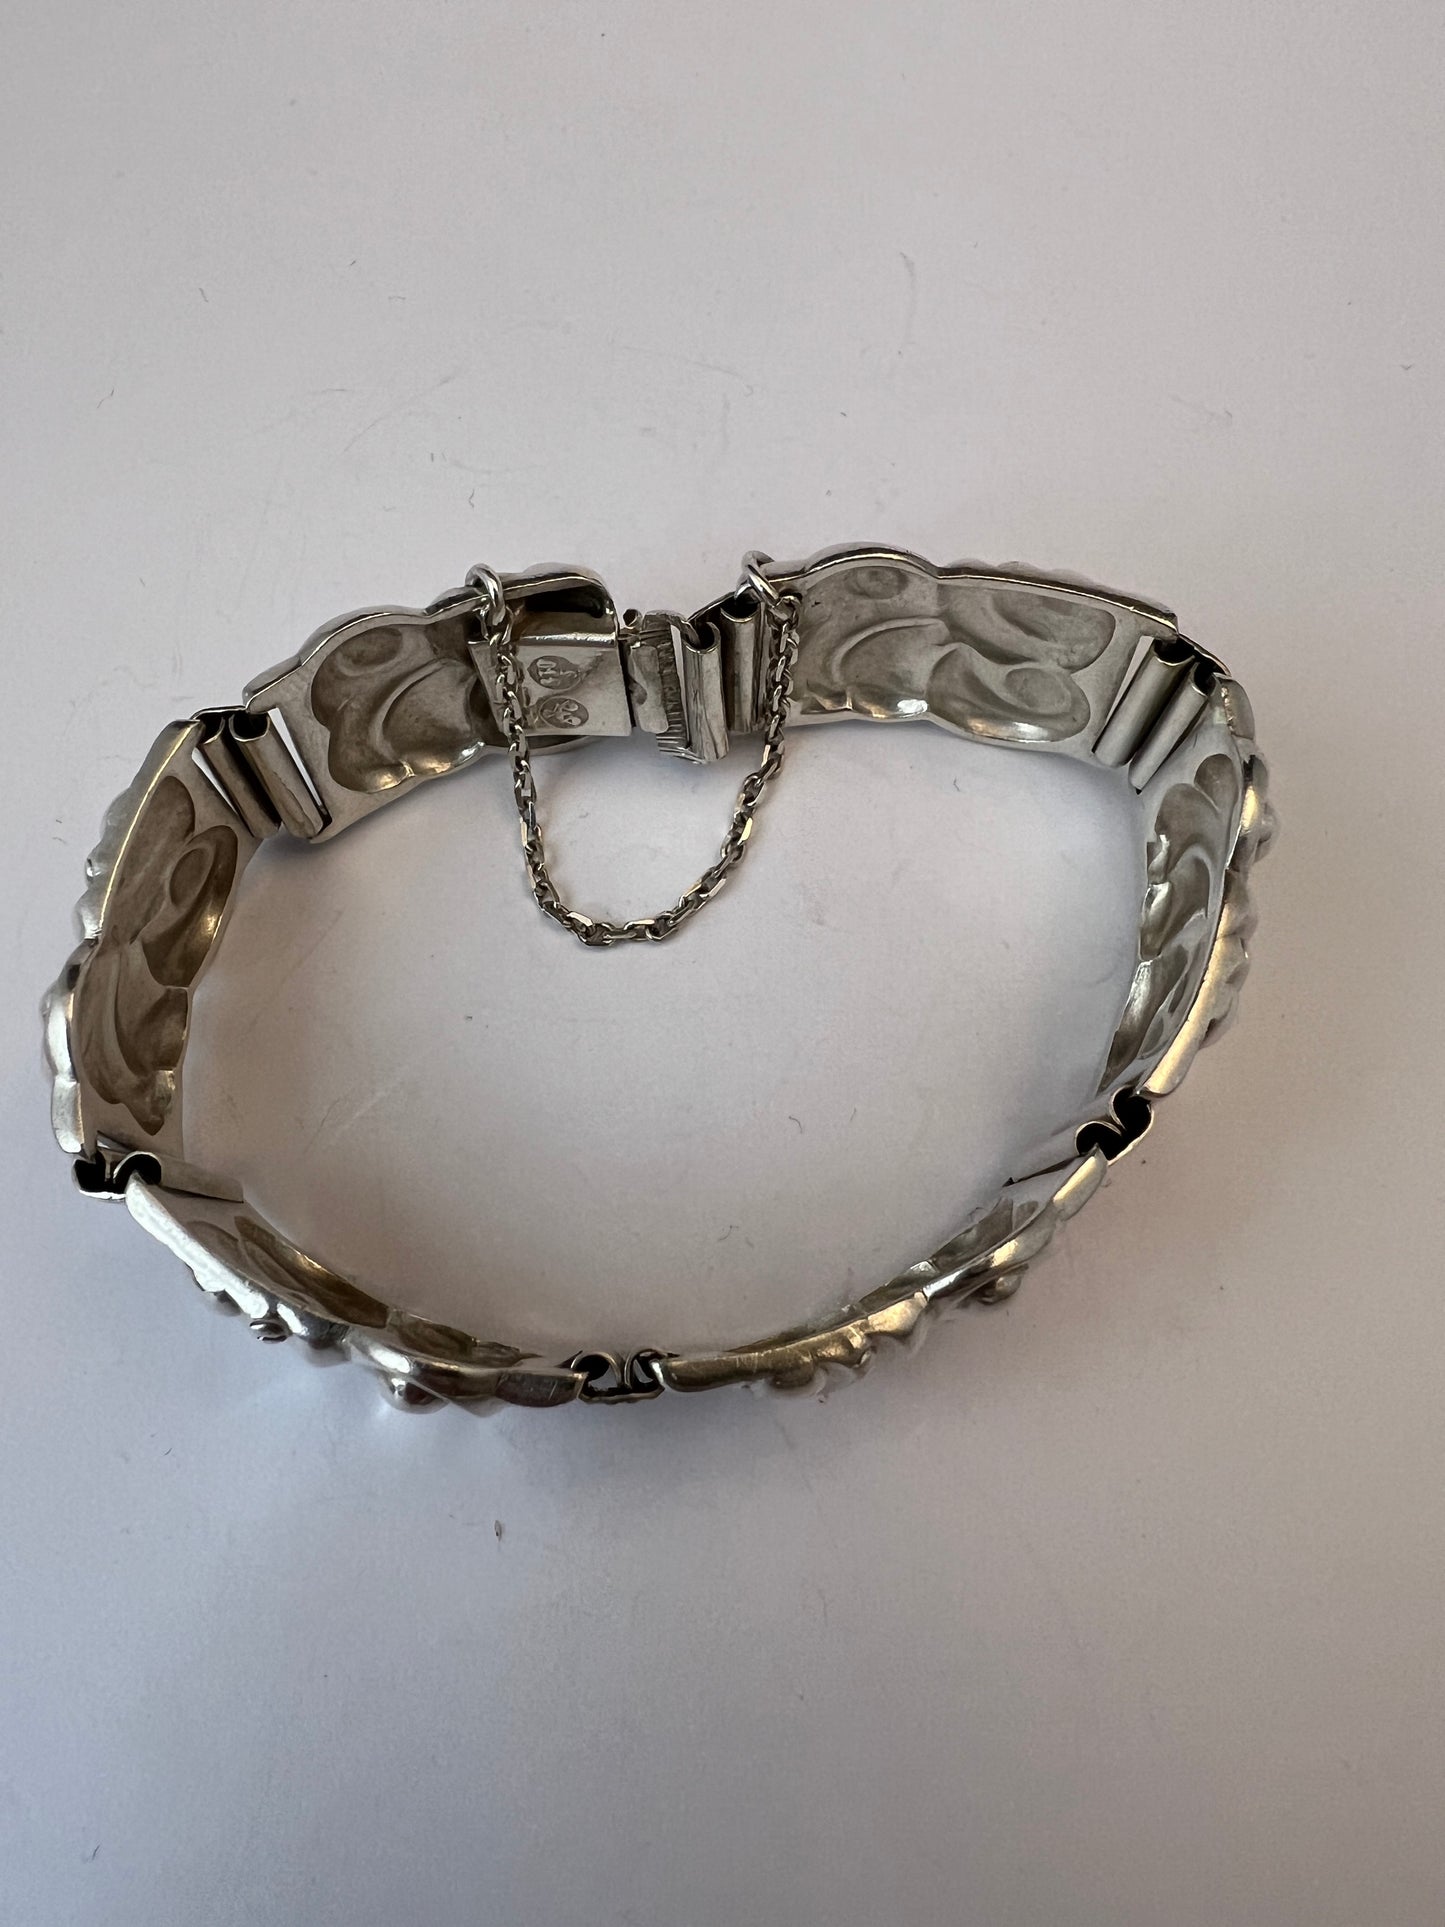 David-Andersen, Norway 1940-50s. Solid 830 Silver Bracelet.